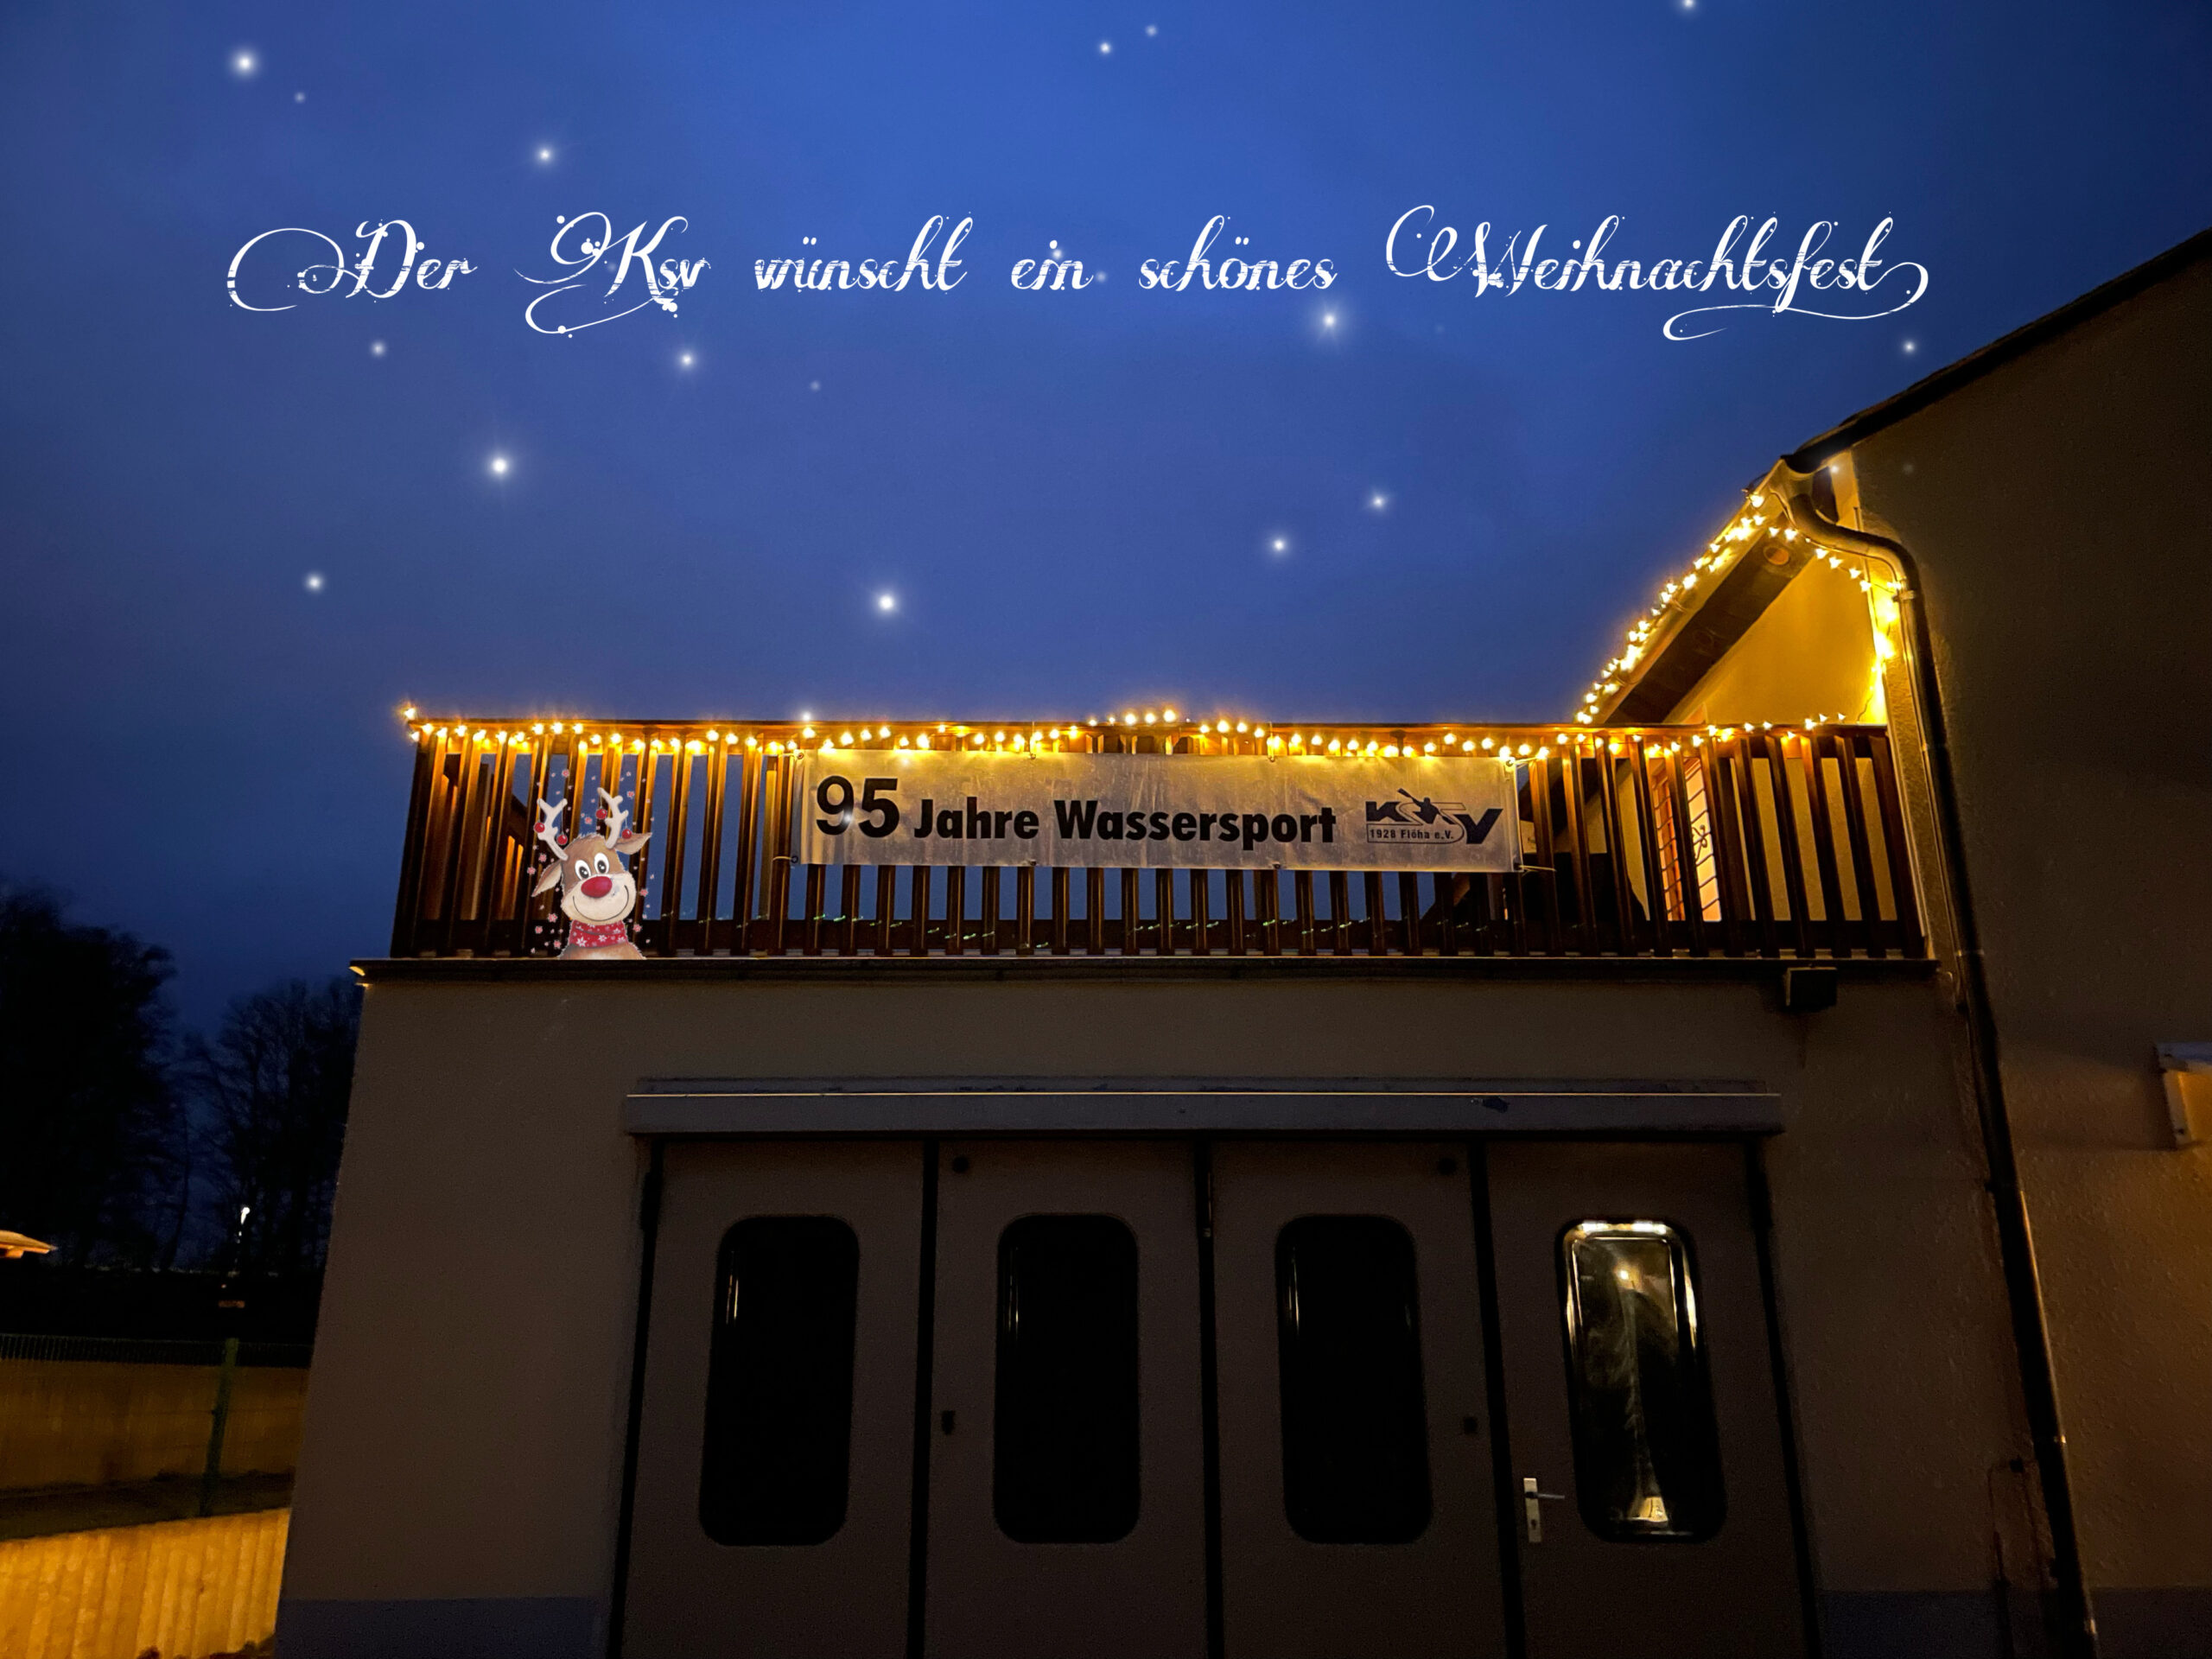 HO, HO, HO…Fröhliche Weihnachten